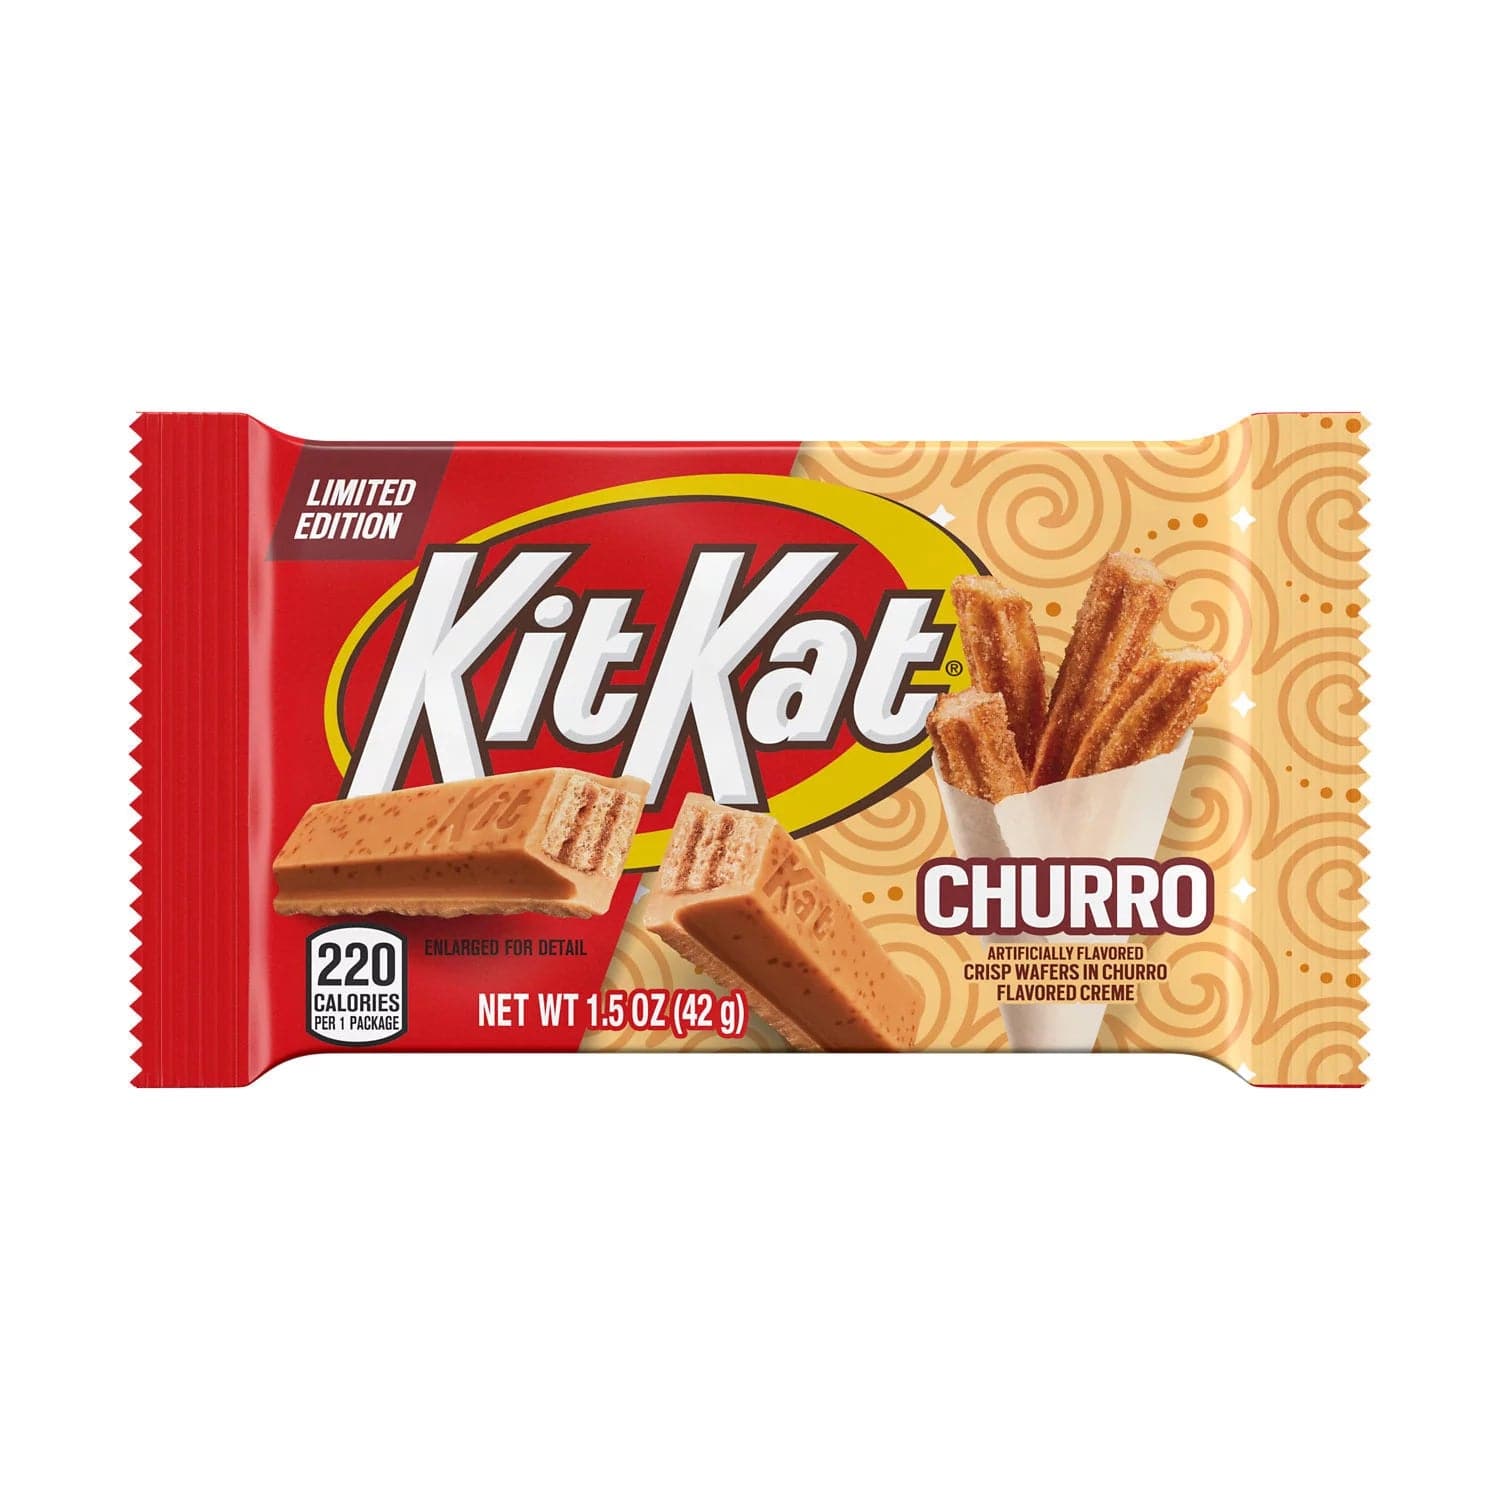 KitKat Limited Edition